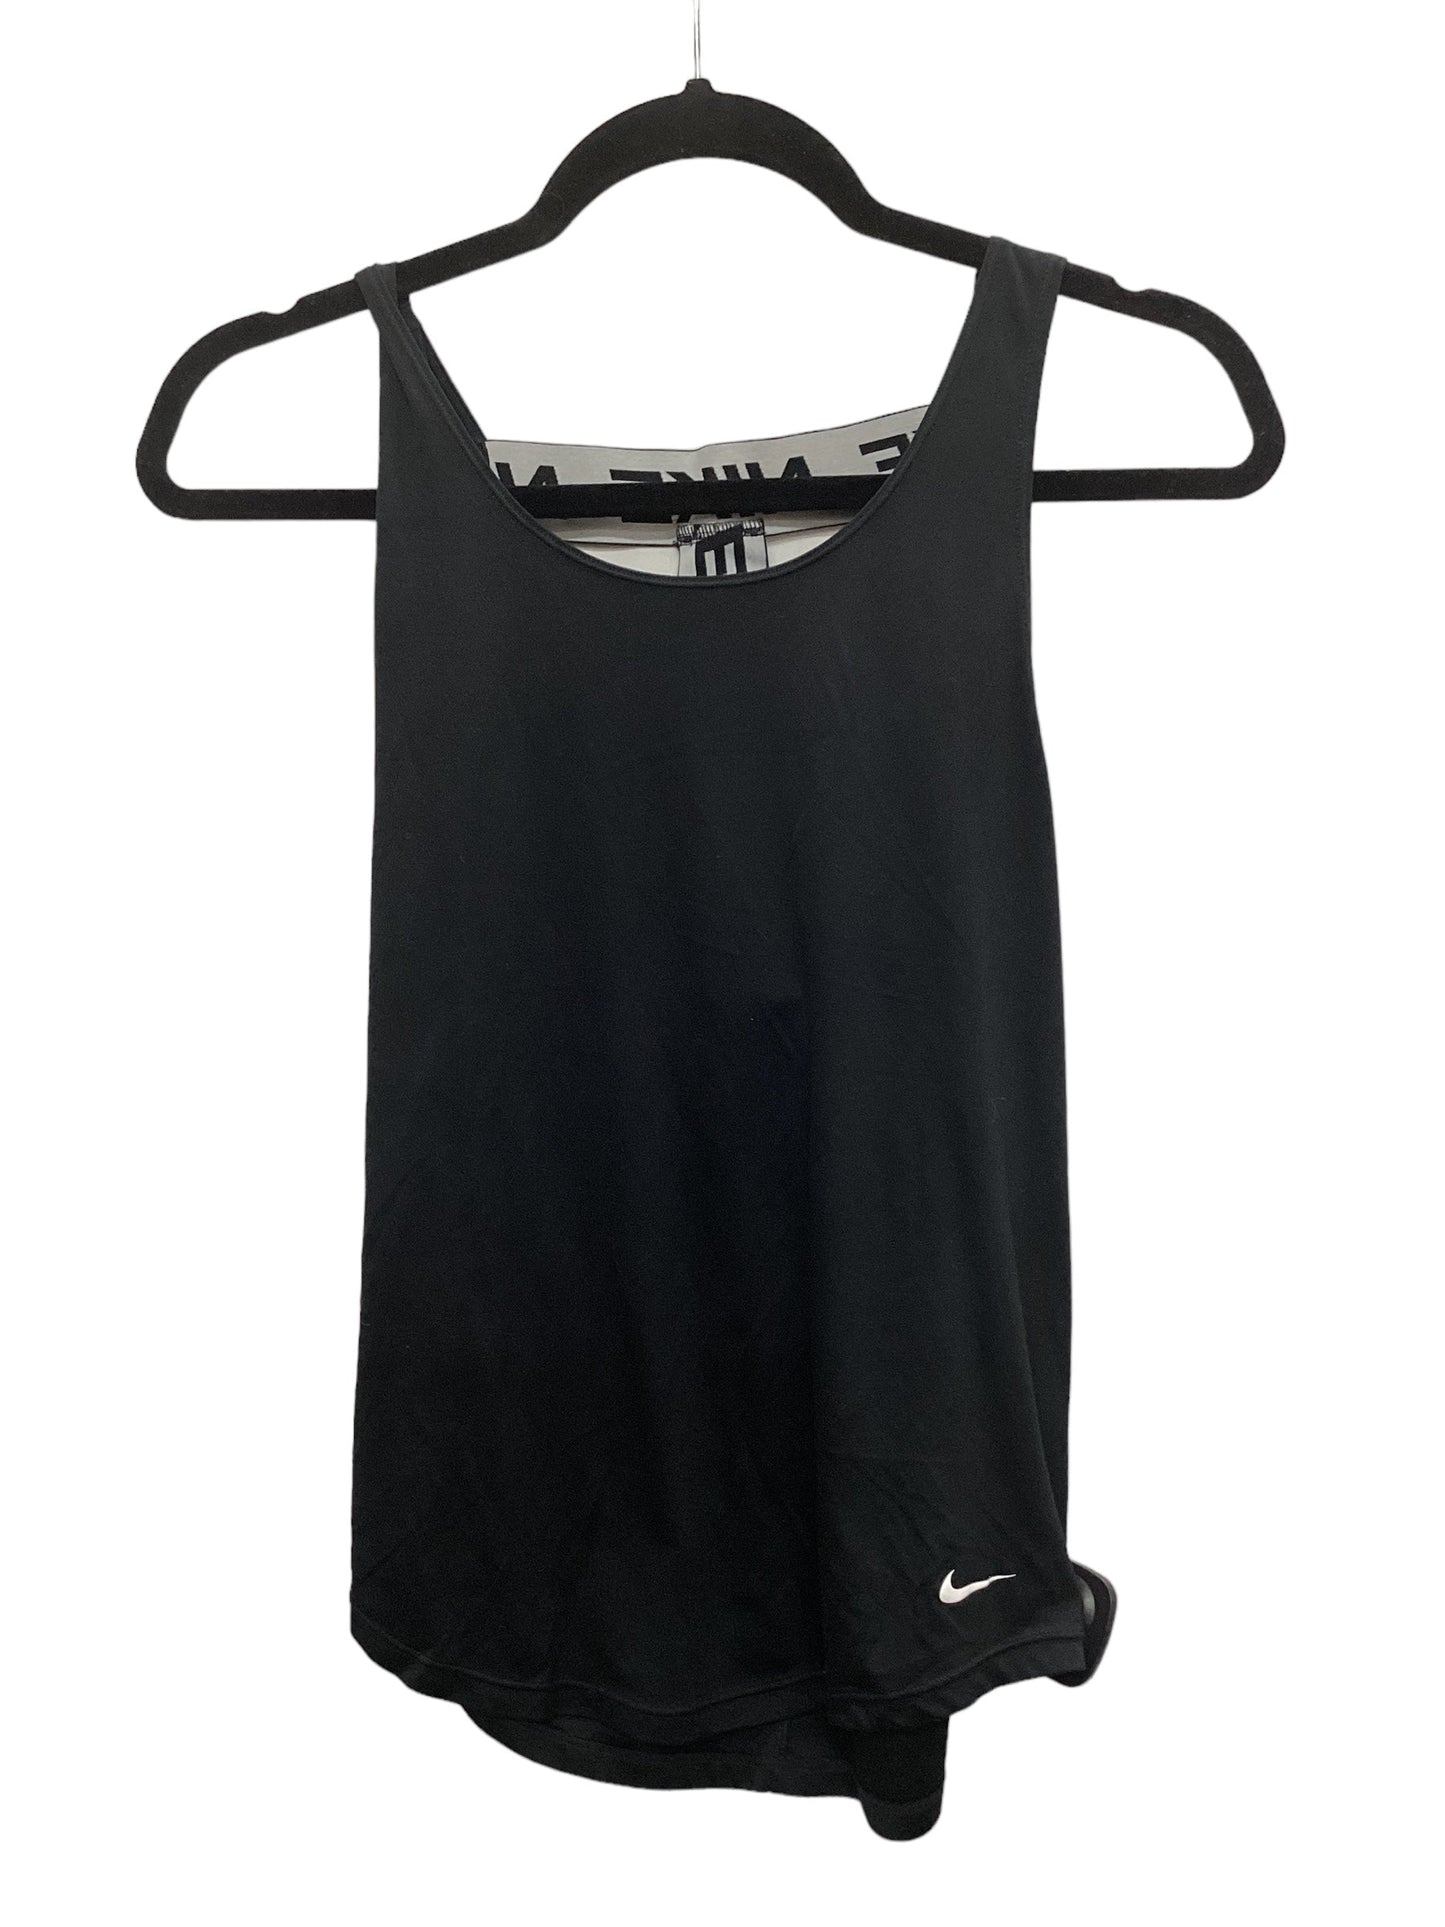 Black Athletic Tank Top Nike Apparel, Size S